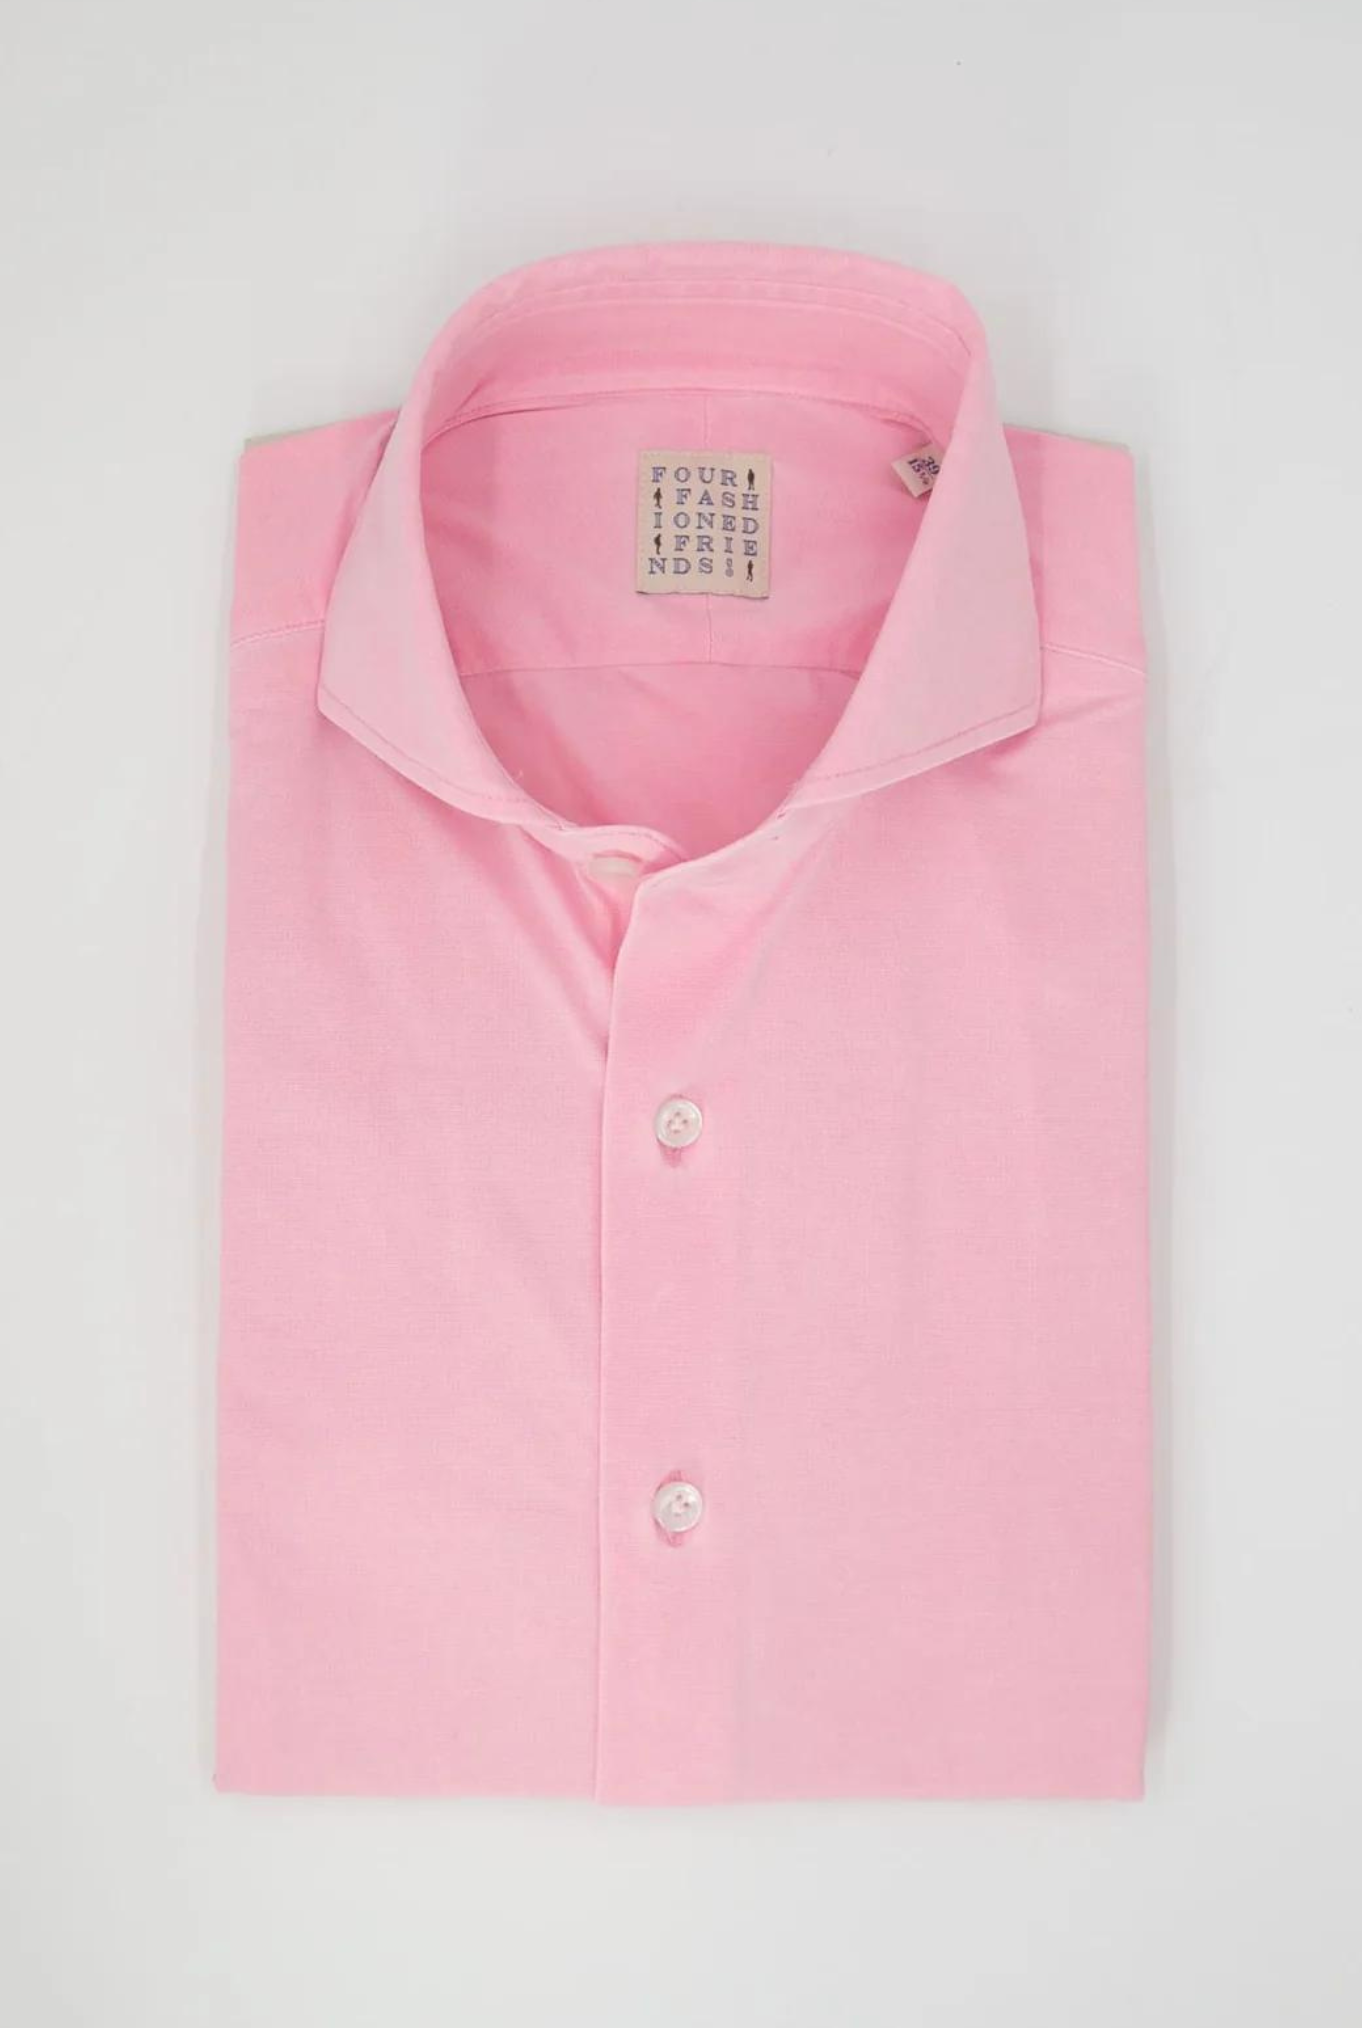 FFF Active Delavé Pink Shirt